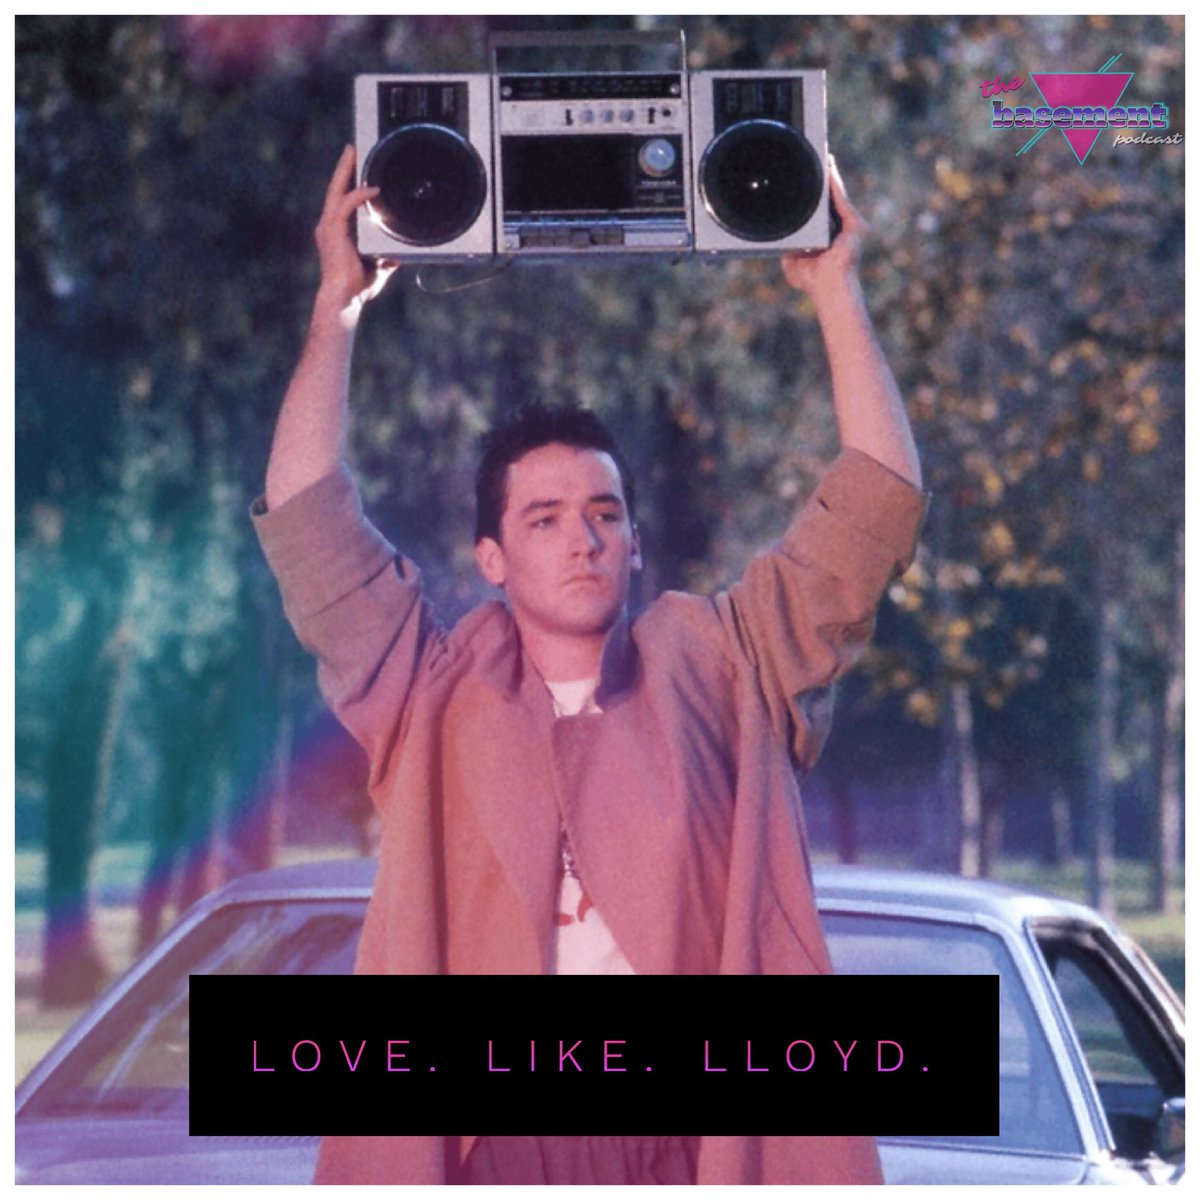 #LoveGoals

Happy Valentine’s Day from The Basement podcast! Love. Like. Lloyd. 

#TheBasement #ReadyPlayerOne #LoveLikeLloyd #Podcast #SayAnthing #JohnCusack #IoneSkye #JohnMahoney #CameronCrowe #PollyPlatt #ValentinesDay #Love #InYourEyes #PeterGabriel